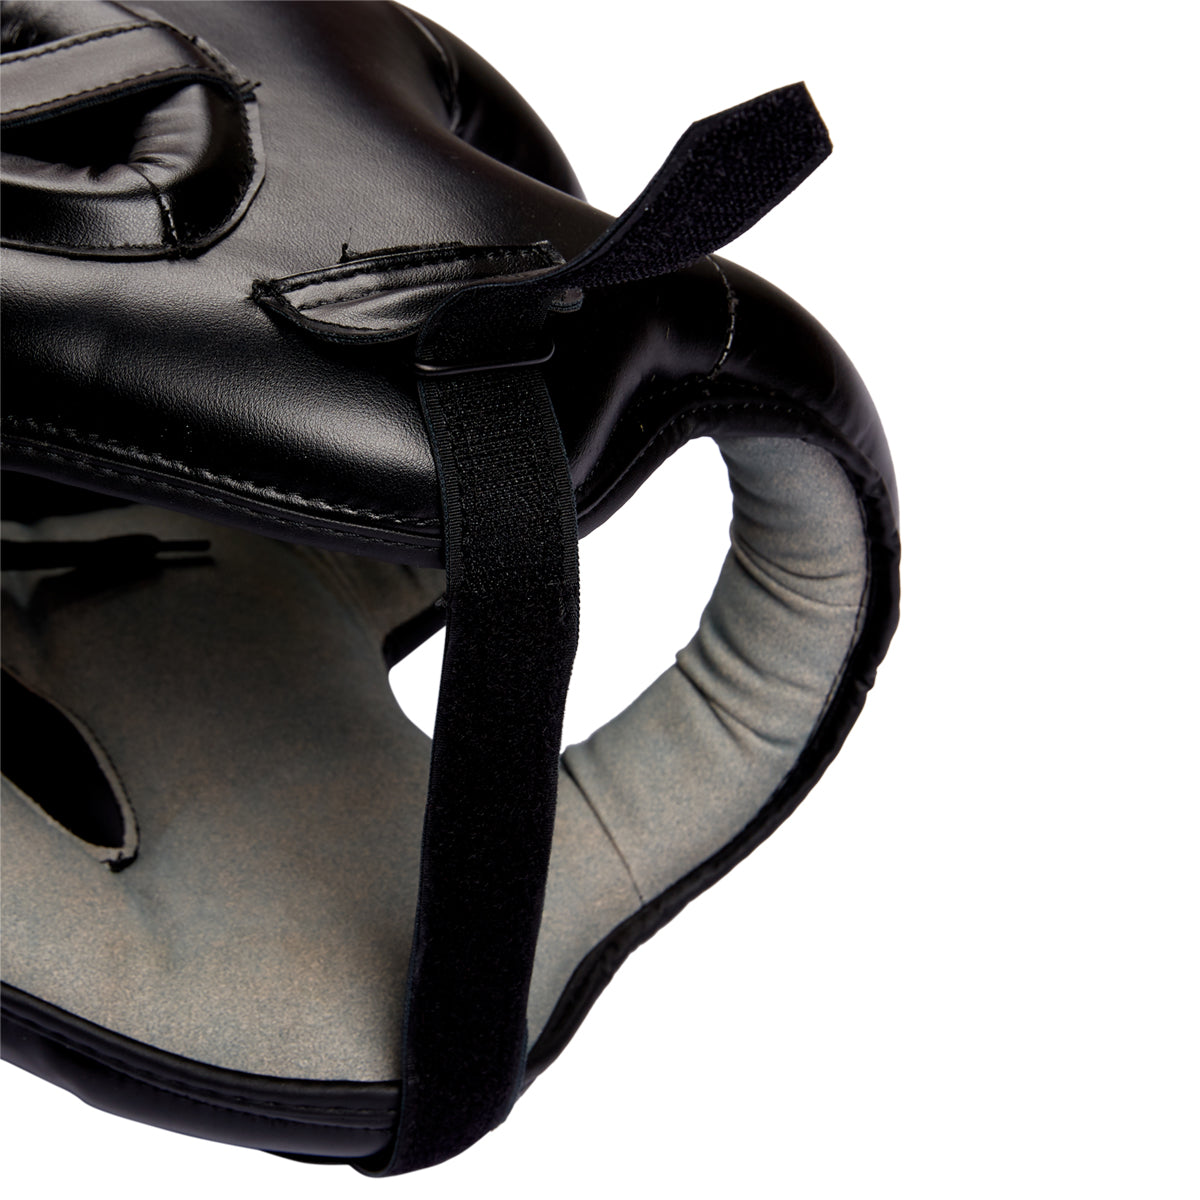 Barrus Max Protection Helmet Black